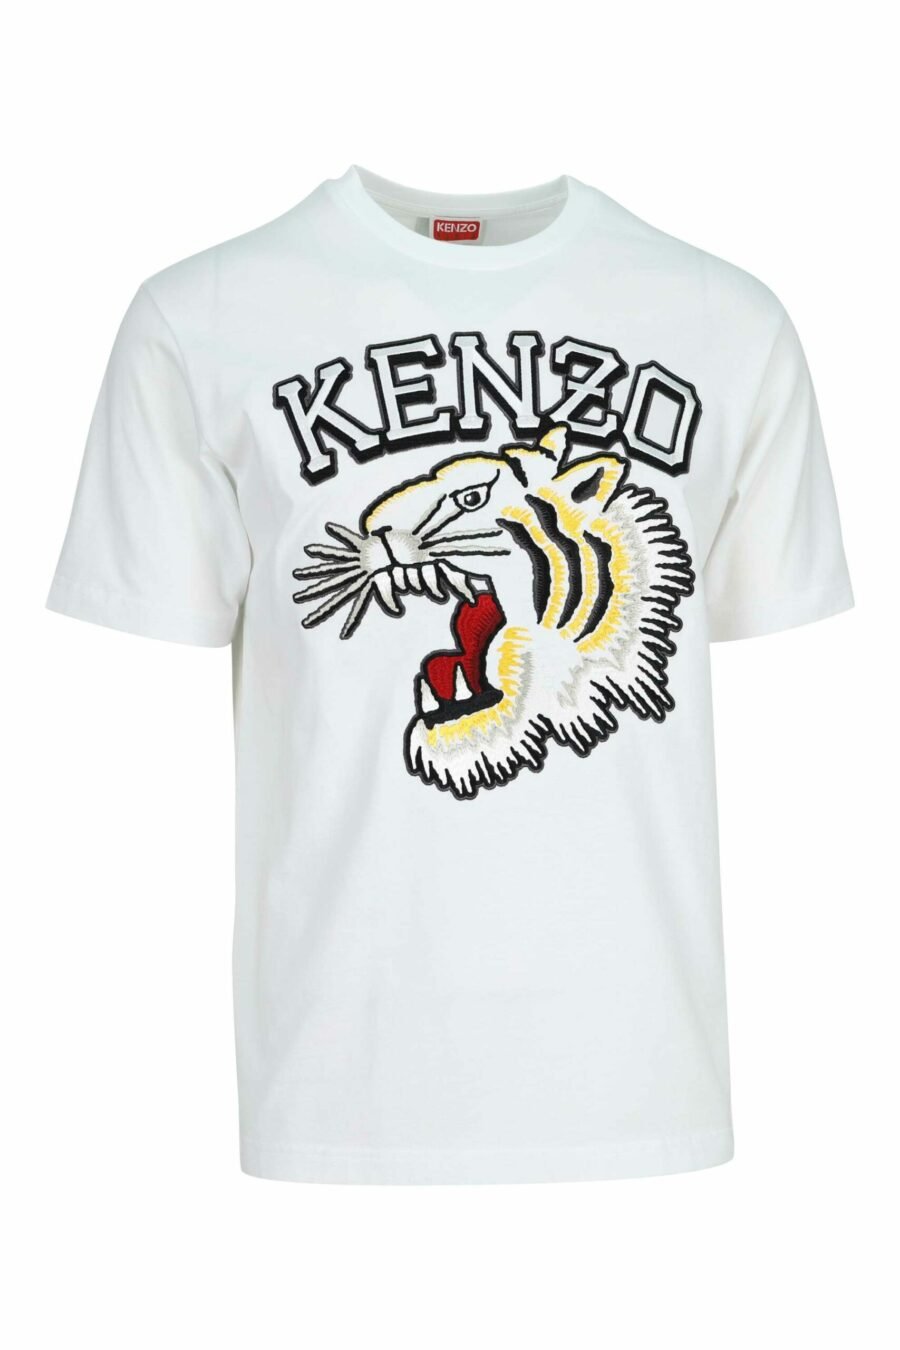 T-shirt branca com maxilogo de tigre multicolorido - 3612230625136 scaled